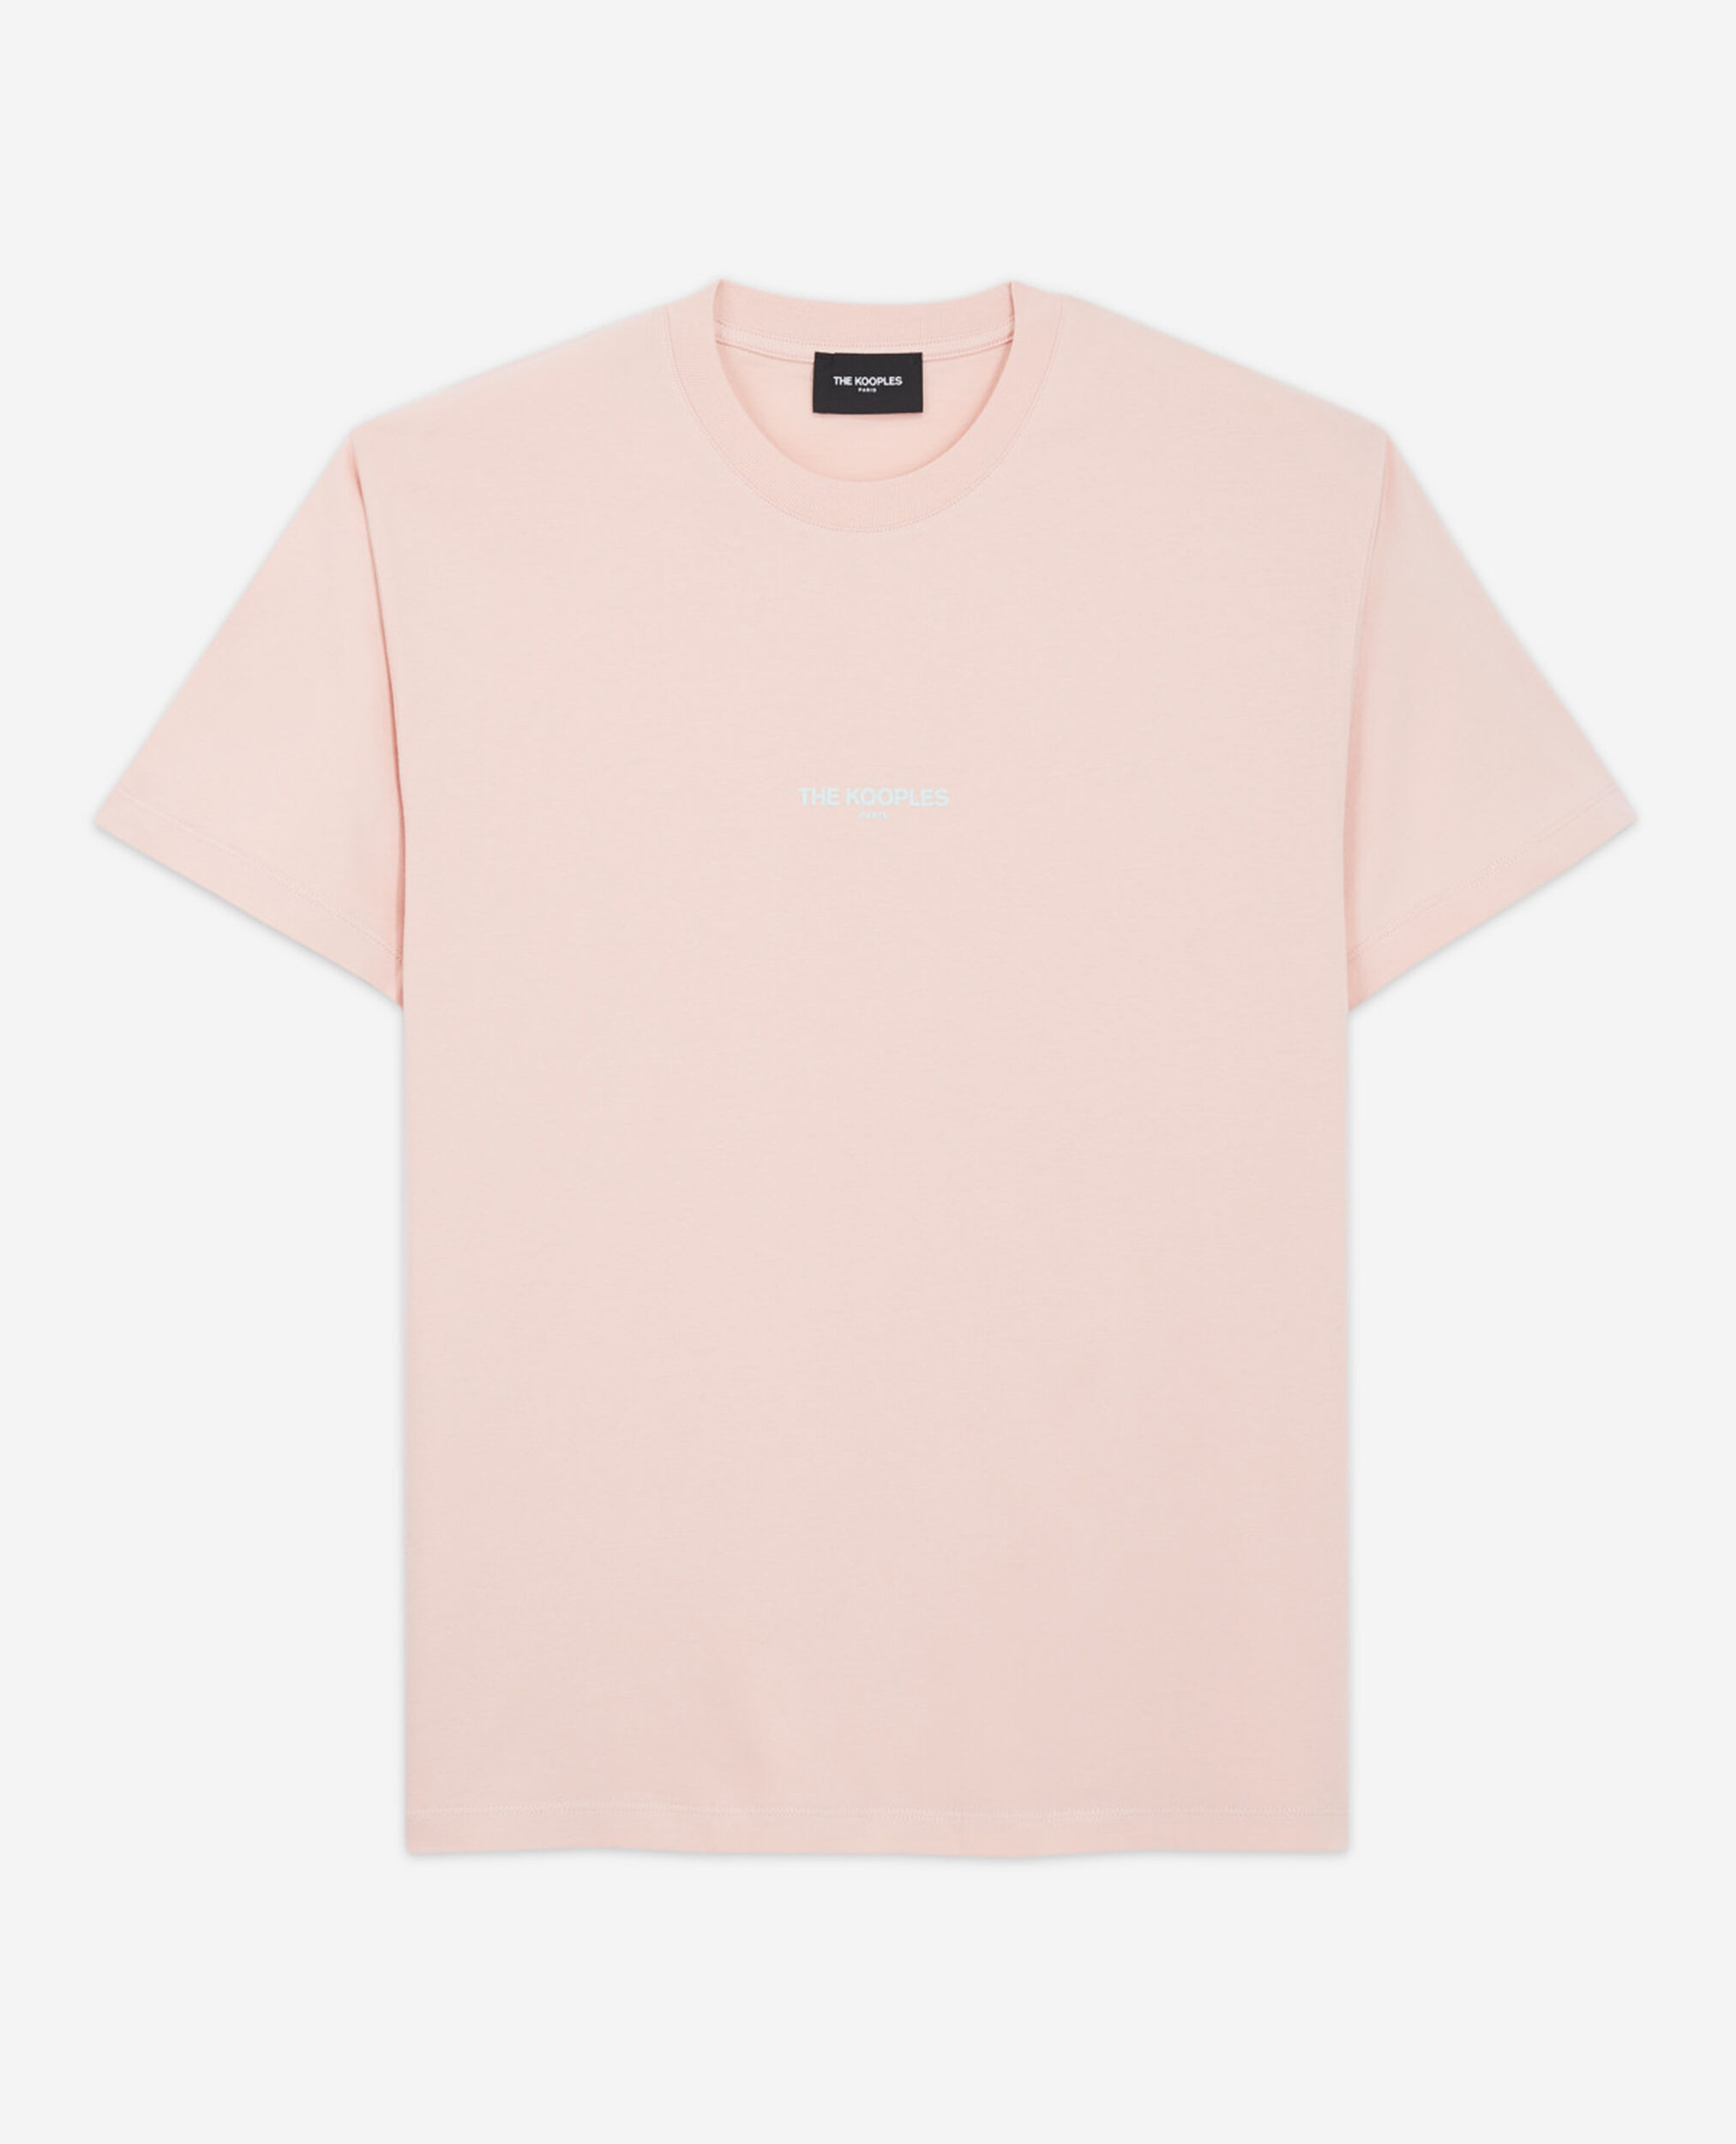 Camiseta rosa logotipo The Kooples contraste, PINK, hi-res image number null